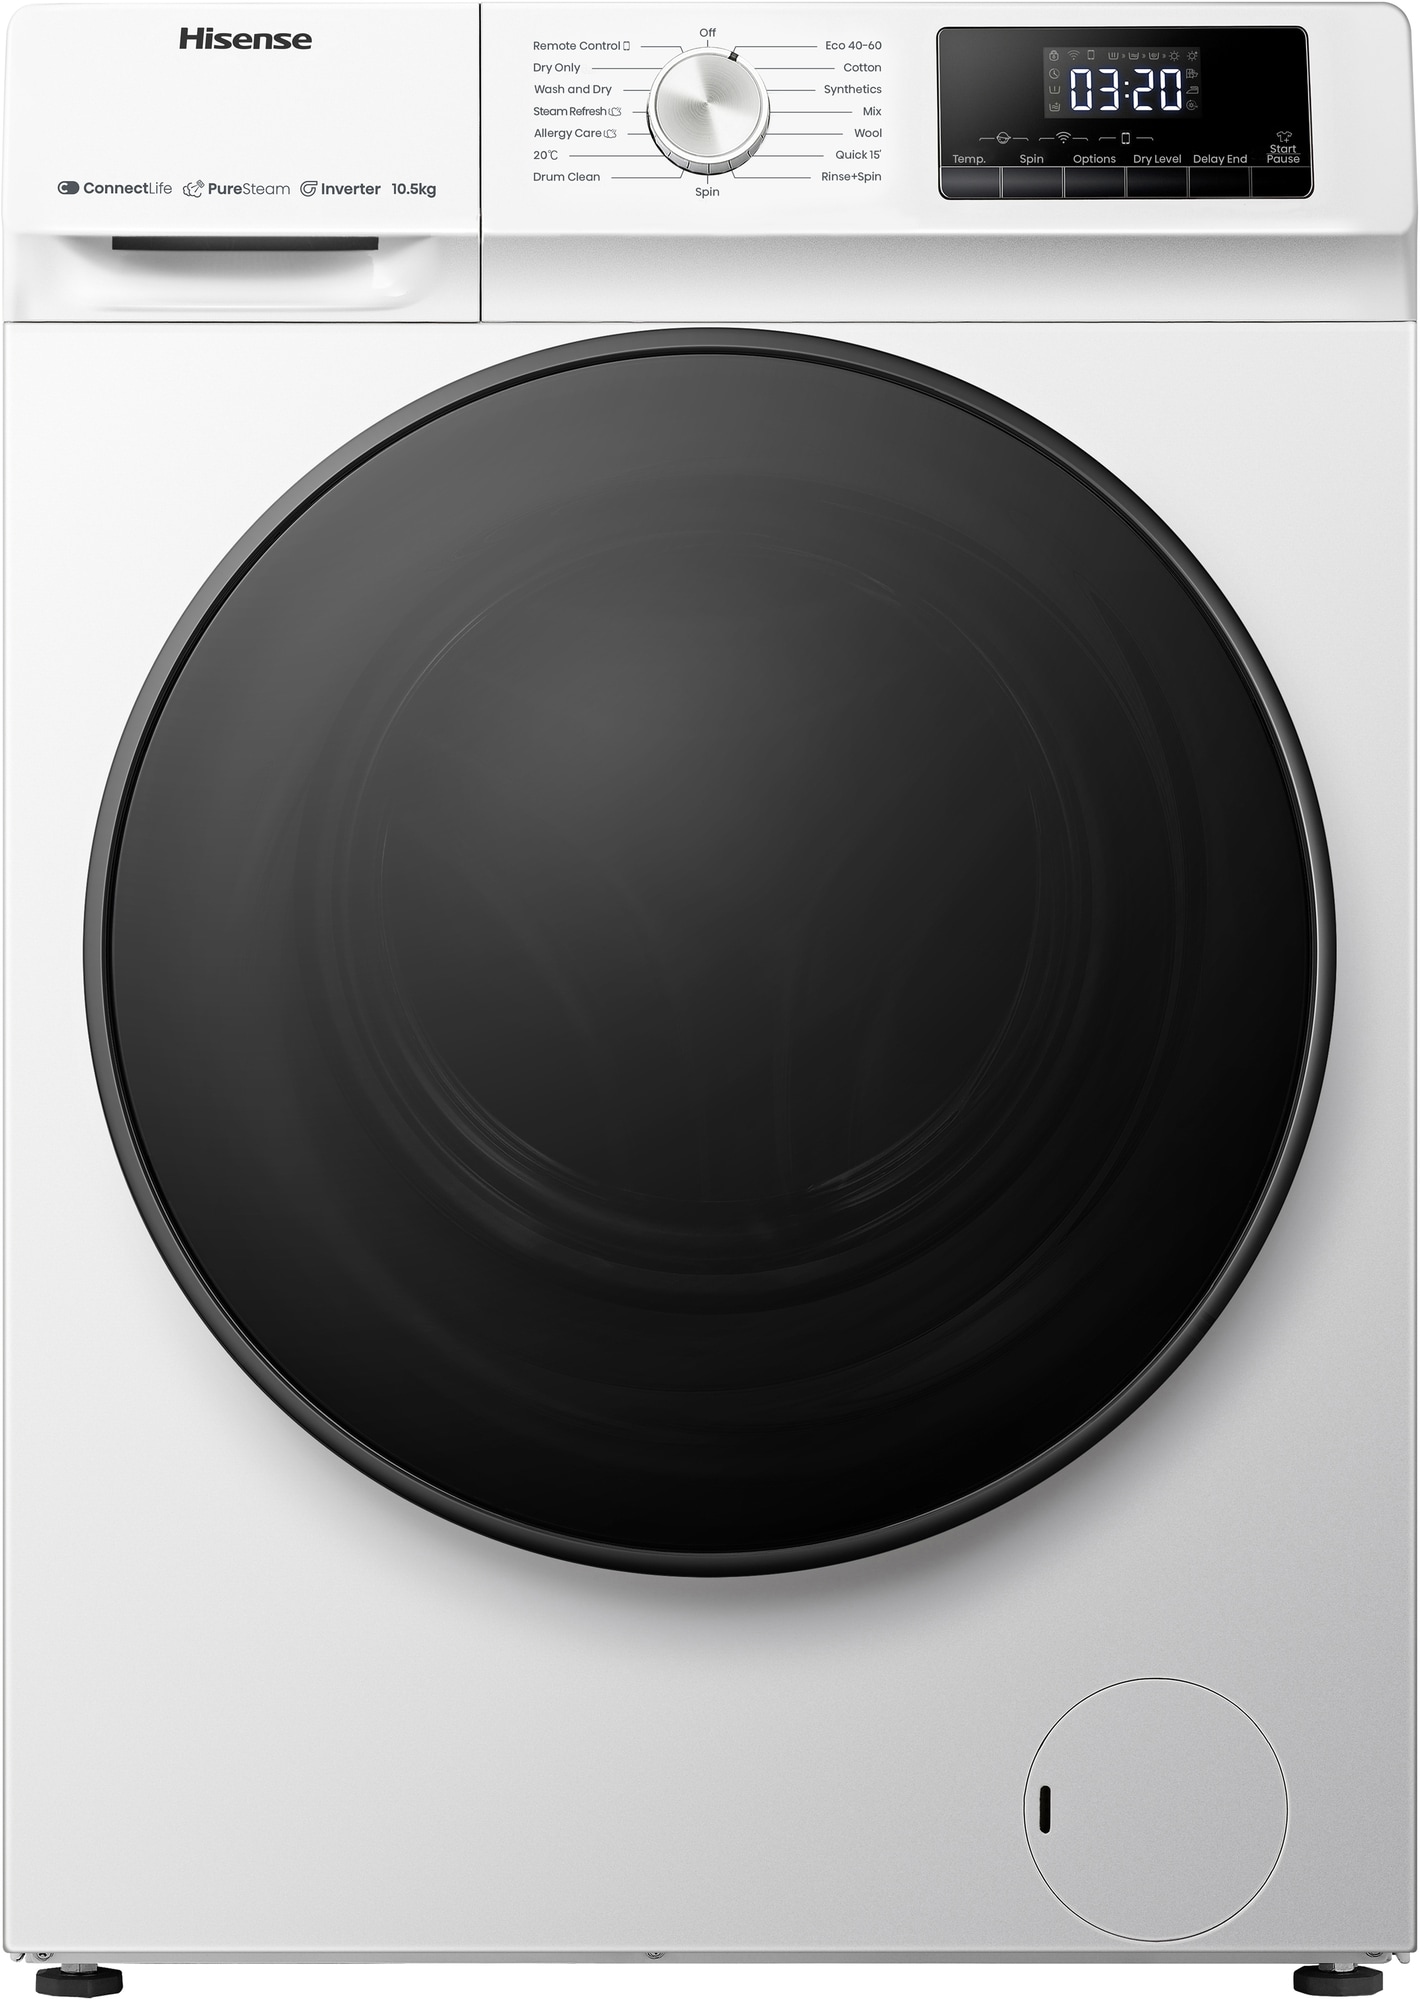 Hisense Washer dryer WD3Q1043BW (White)